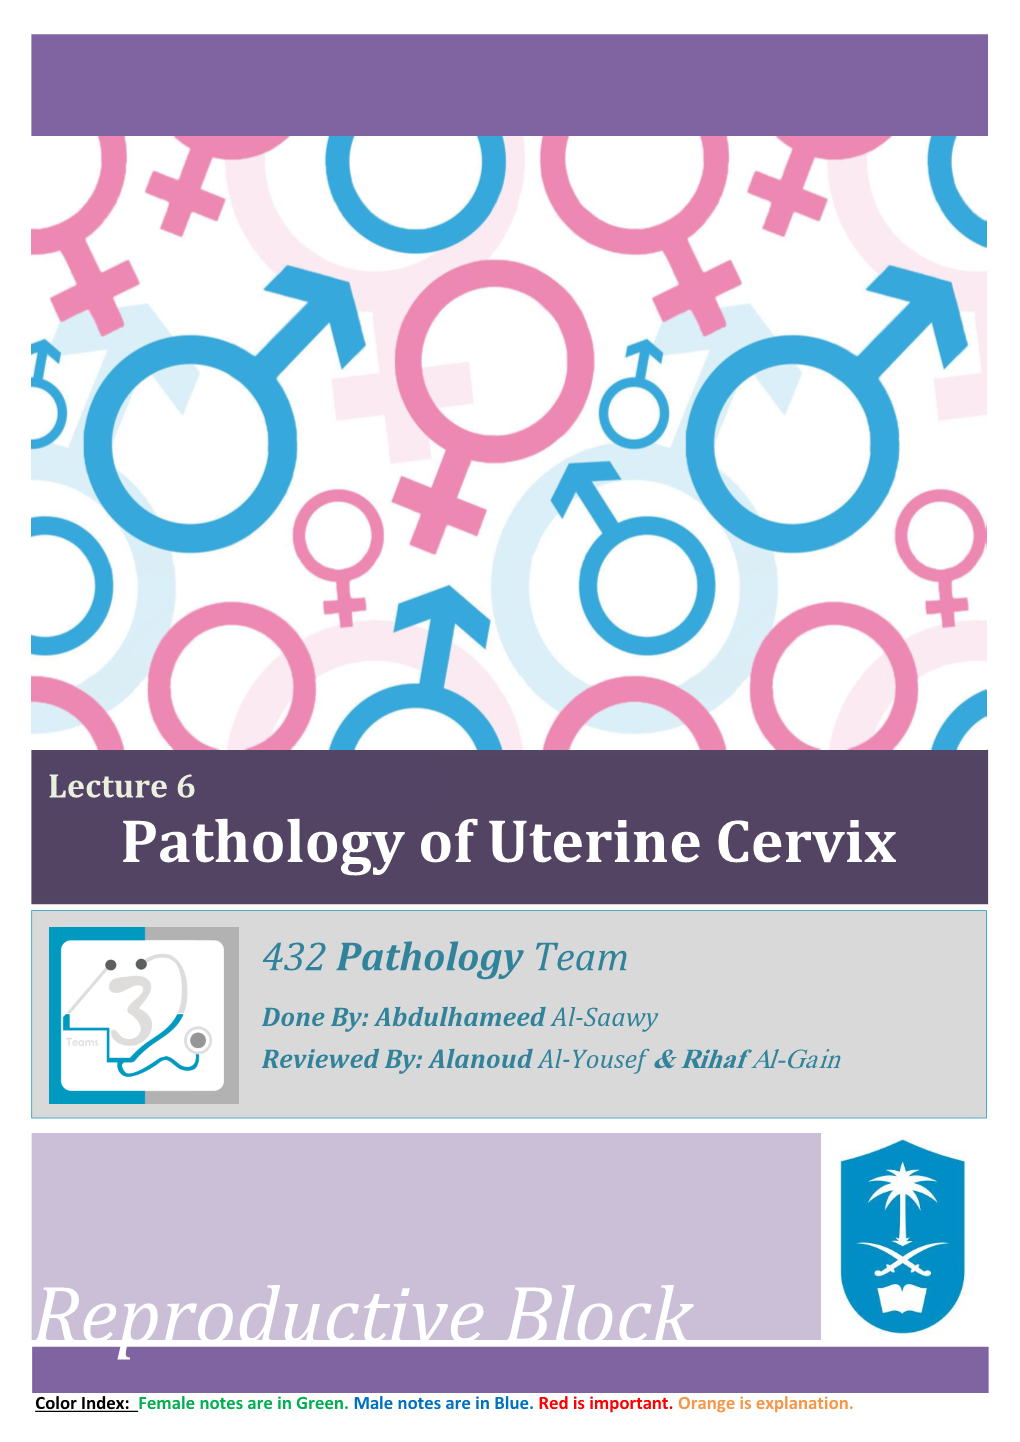 Uterine Cervix